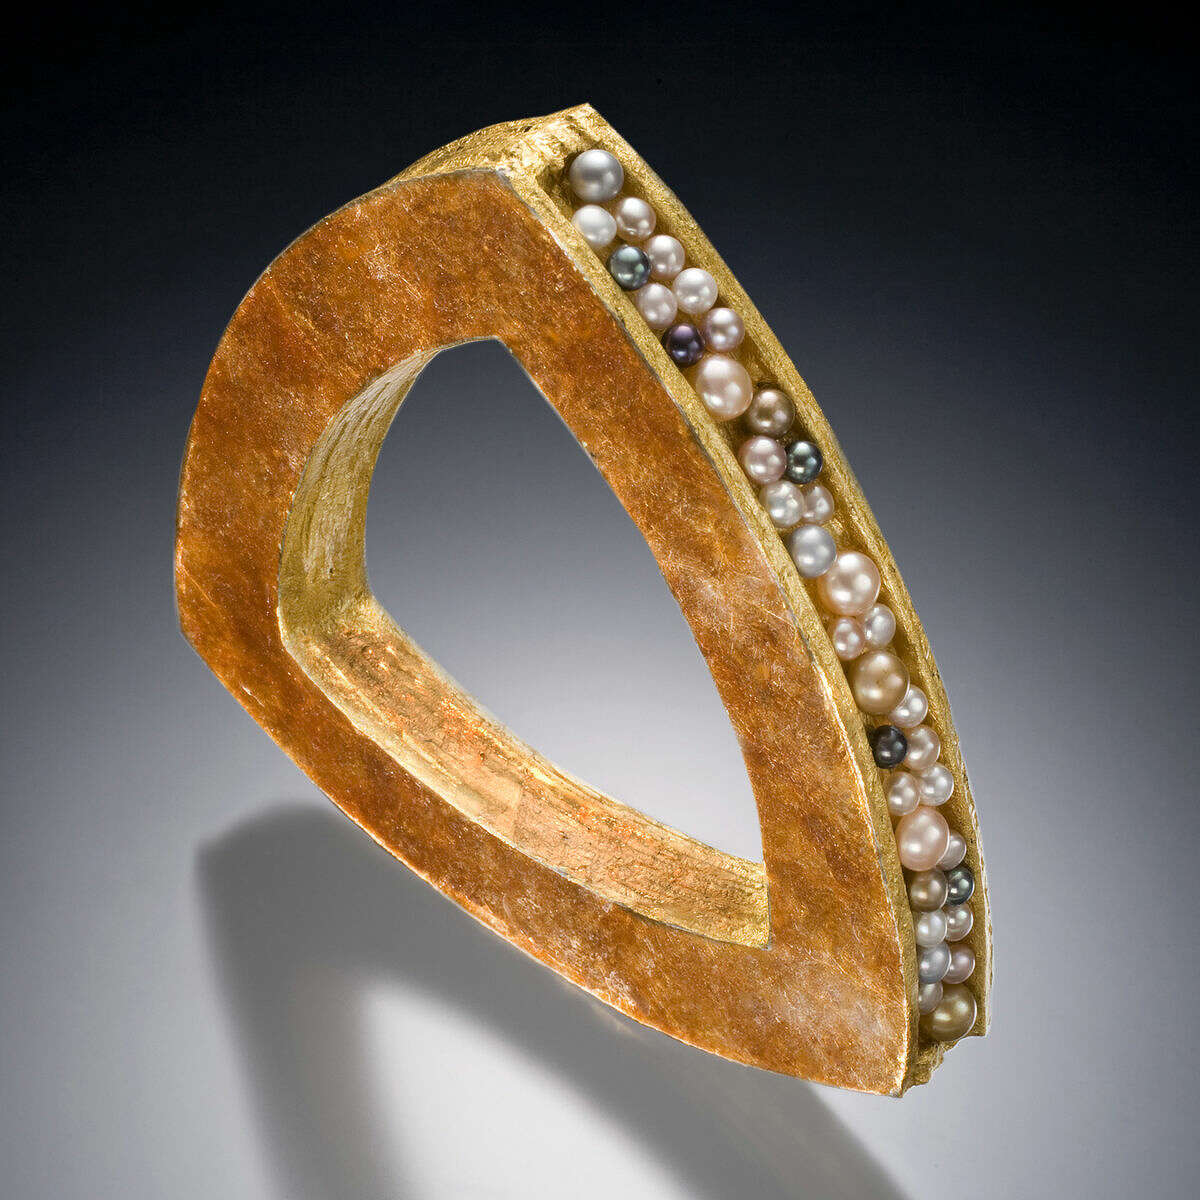 A bangle bracelet by fine jewelry designer Keith Lewis.